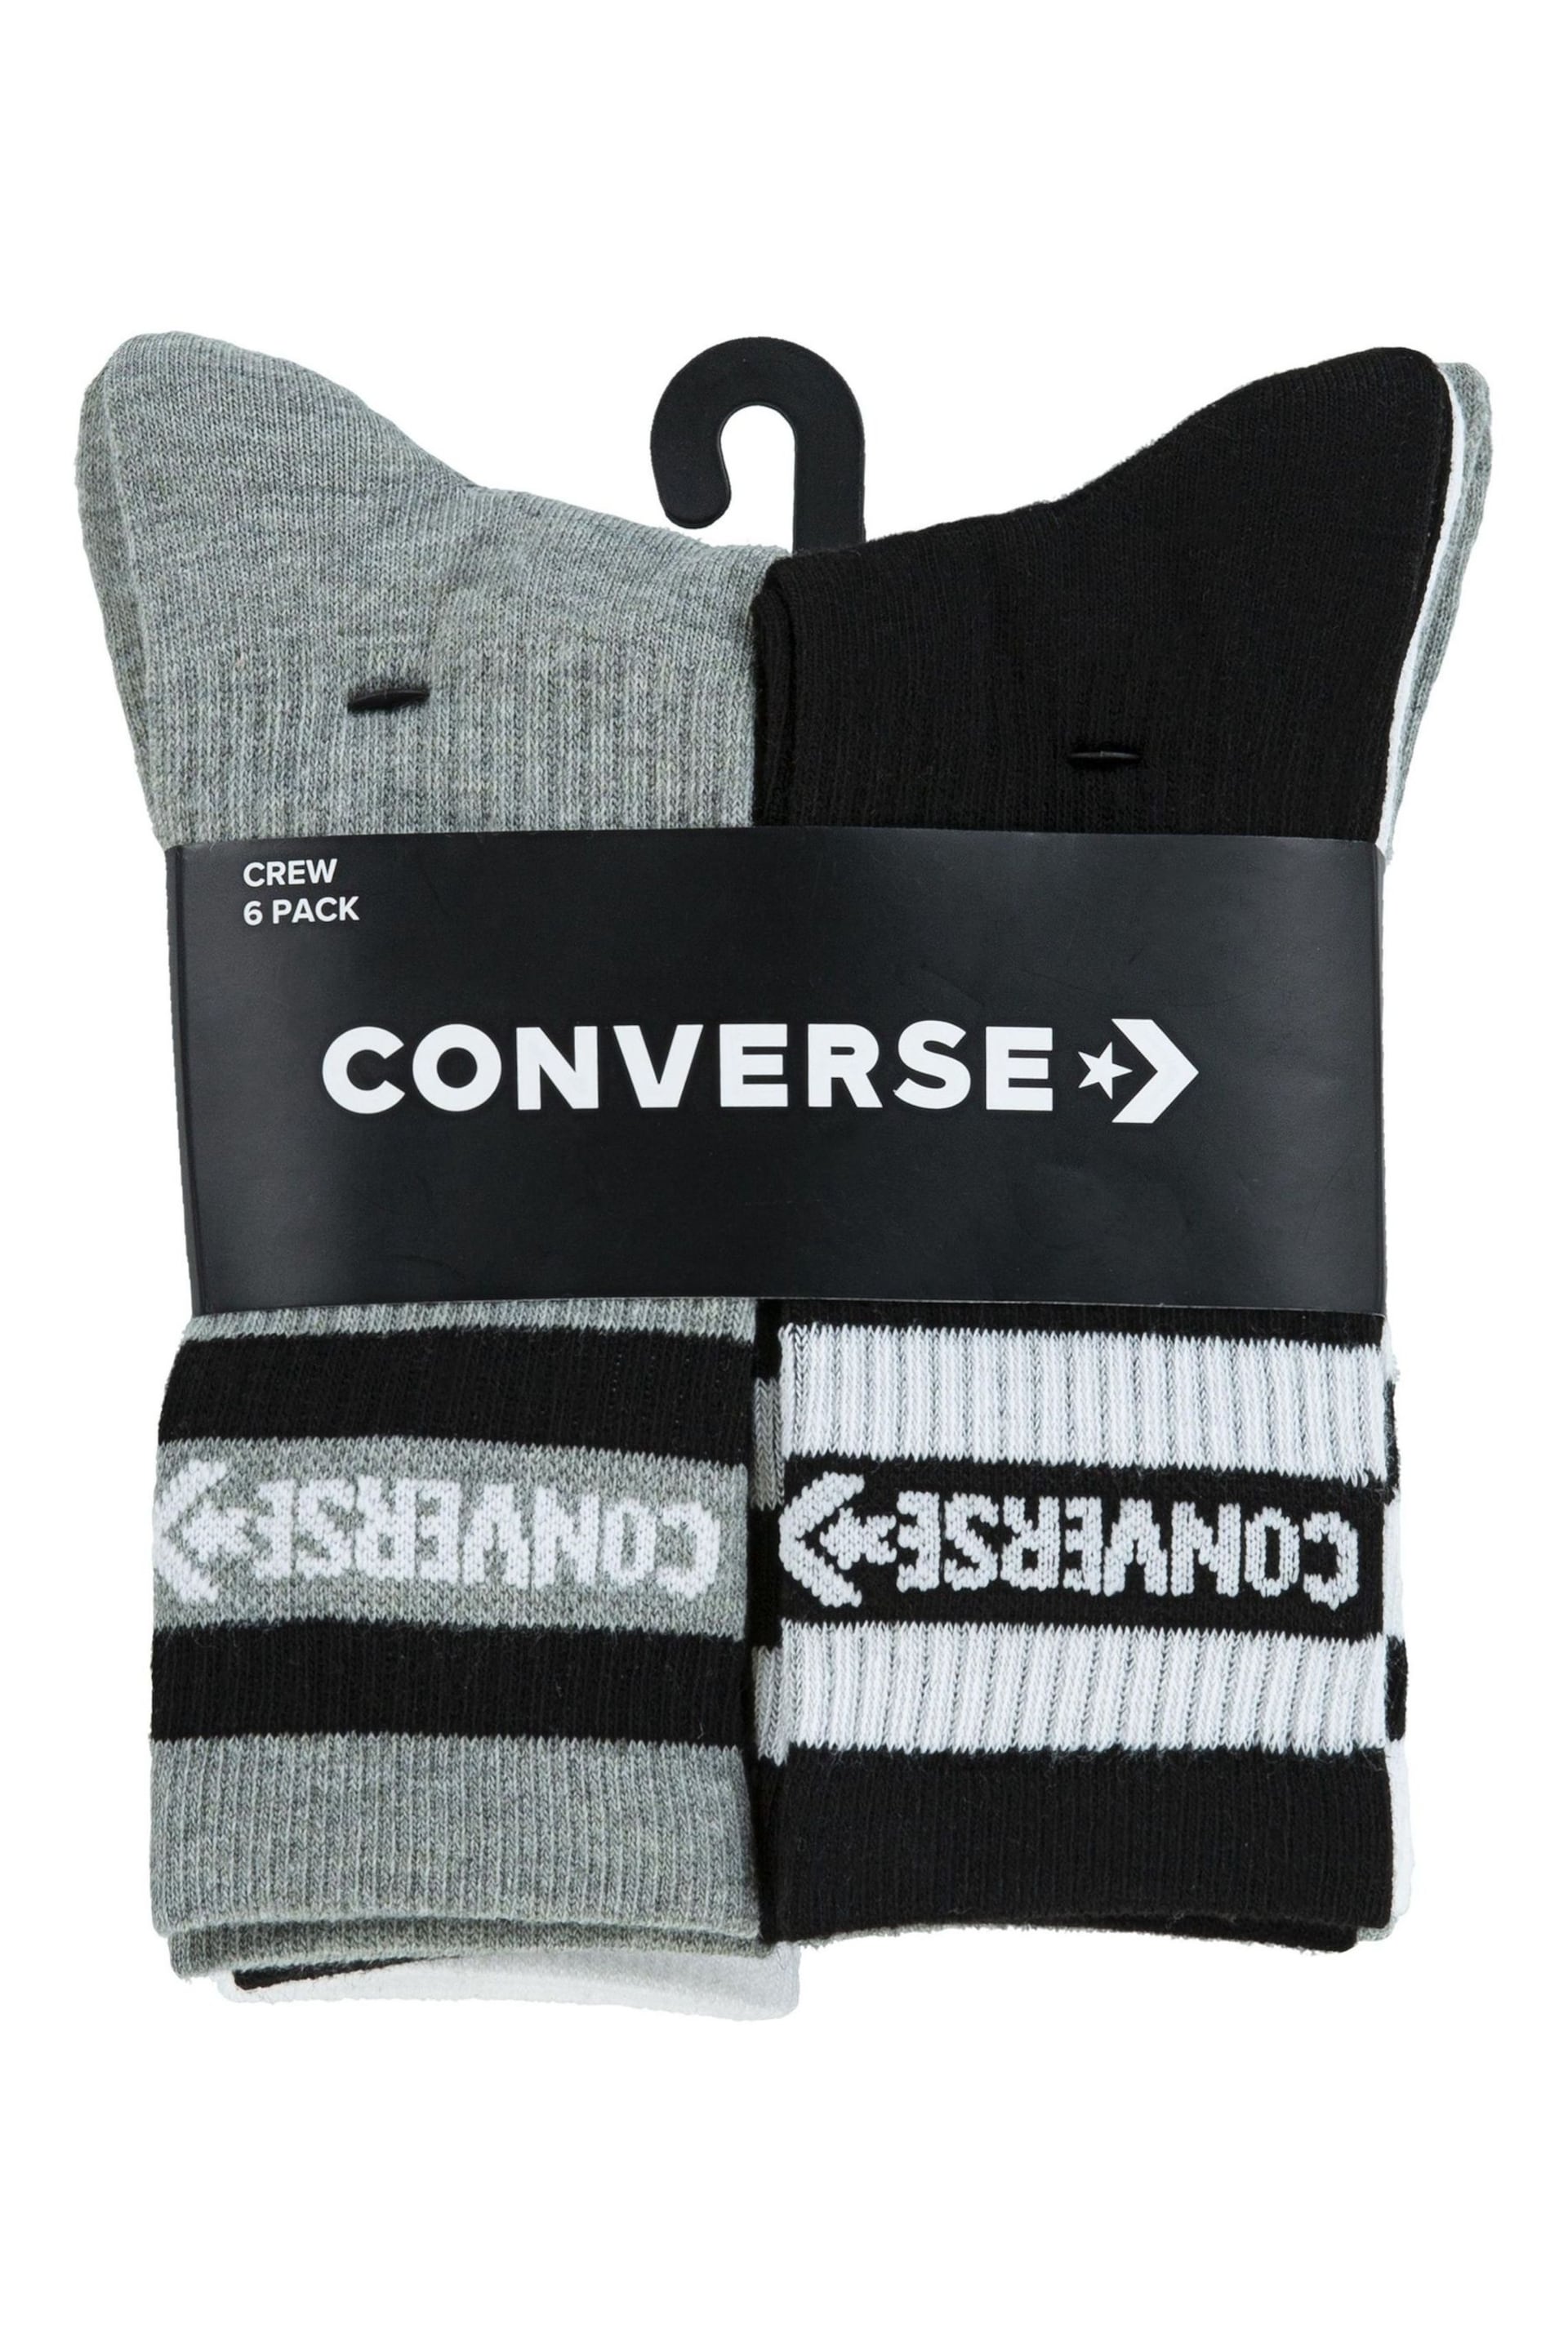 Converse Grey Basic Wordmark Crew Socks 6 Pack - Image 3 of 4